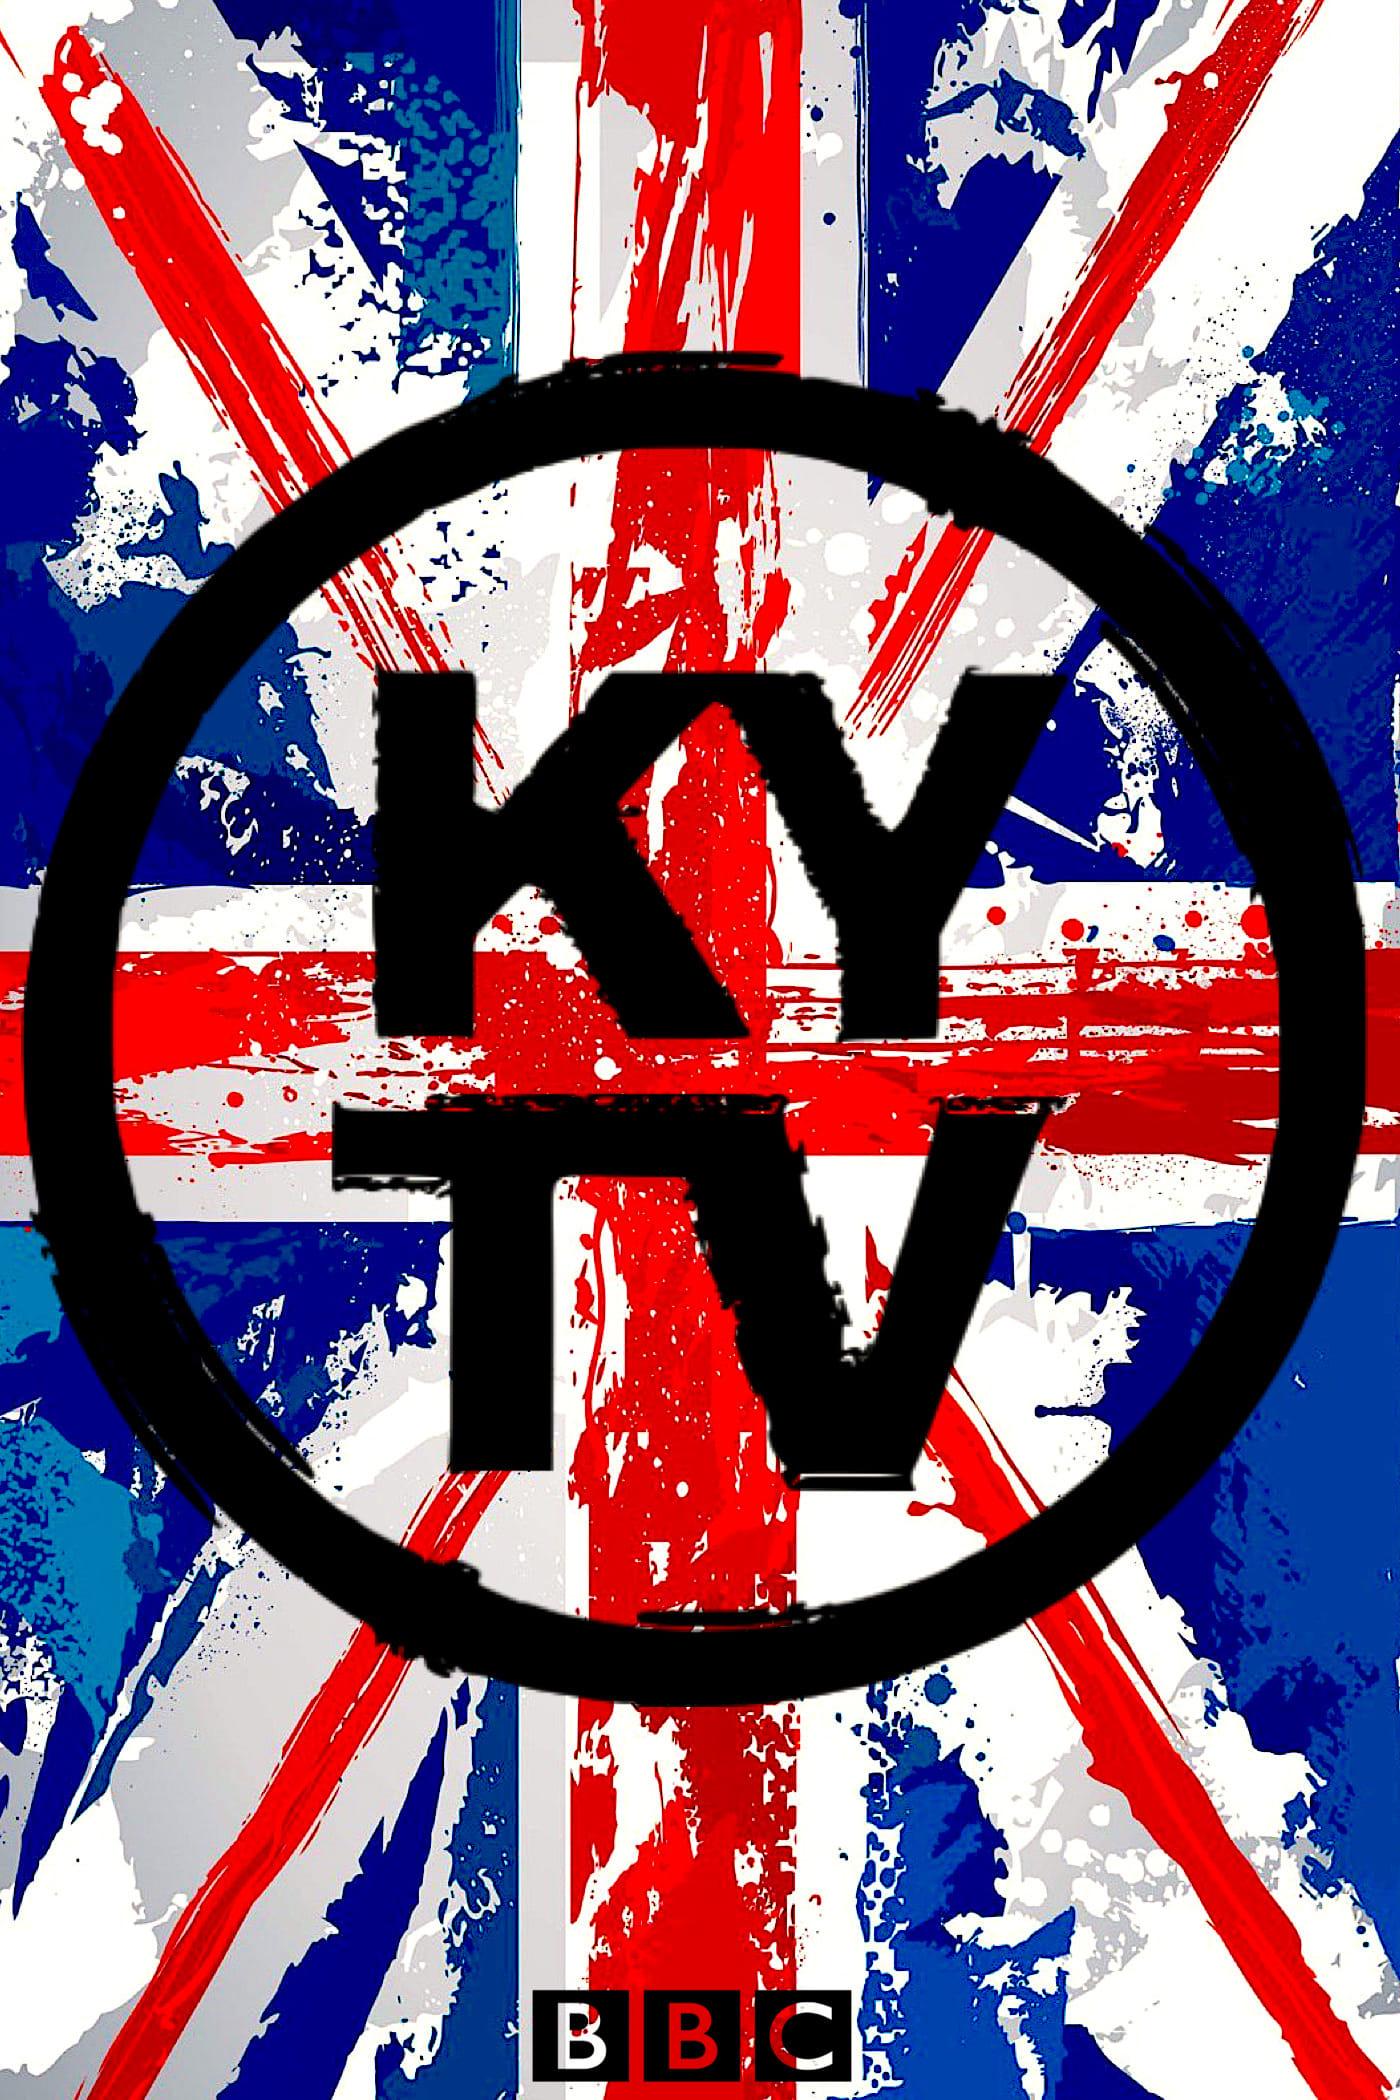 KYTV poster